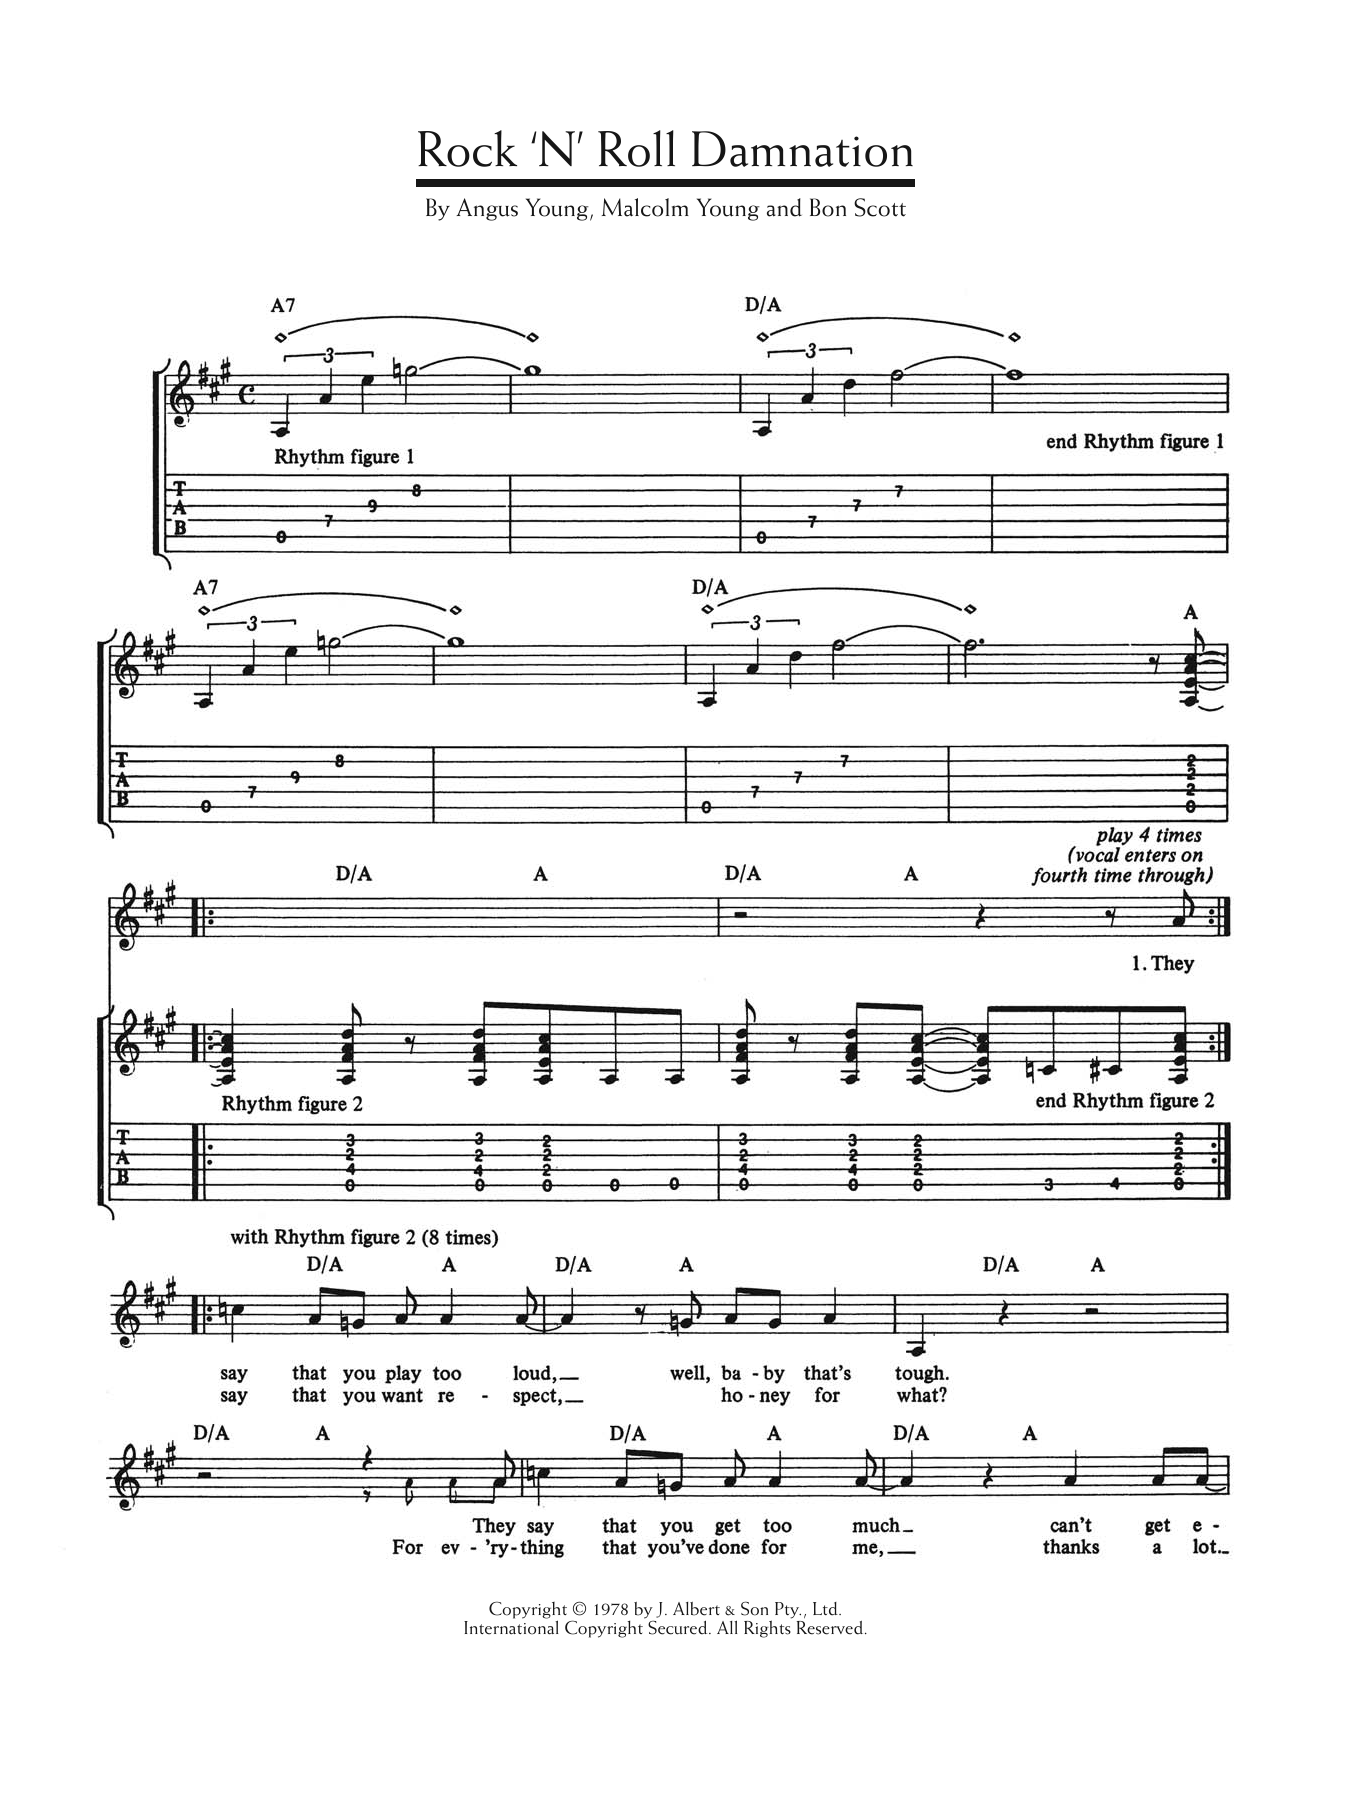 AC/DC Rock 'n' Roll Damnation Sheet Music Notes & Chords for Lyrics & Chords - Download or Print PDF